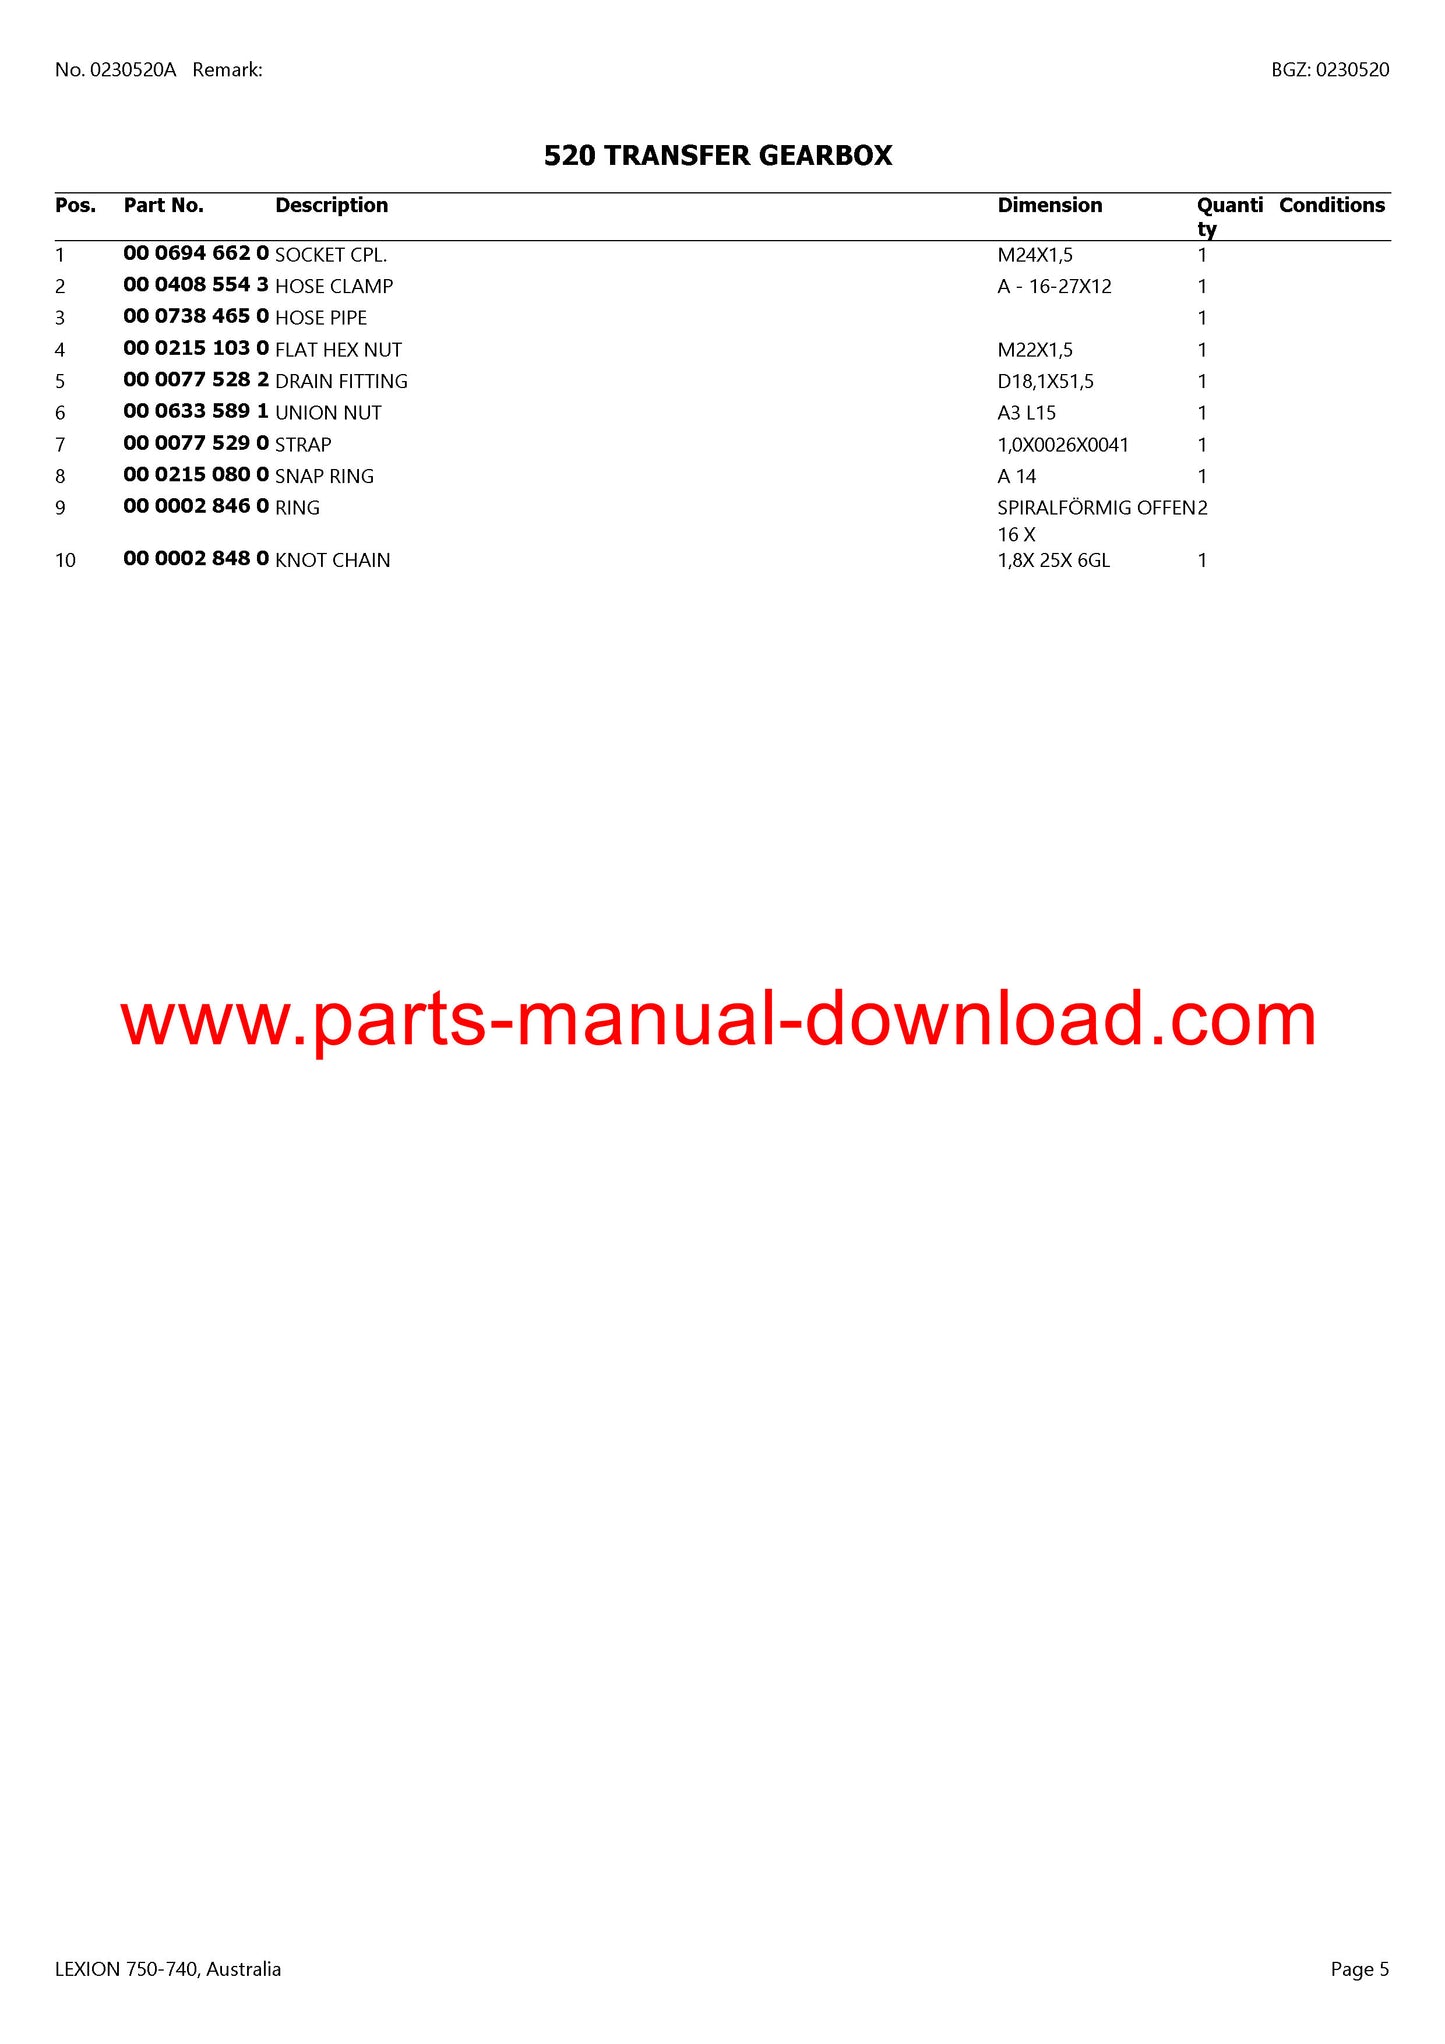 claas 750 - 740 lexion combine parts catalog manual instant download